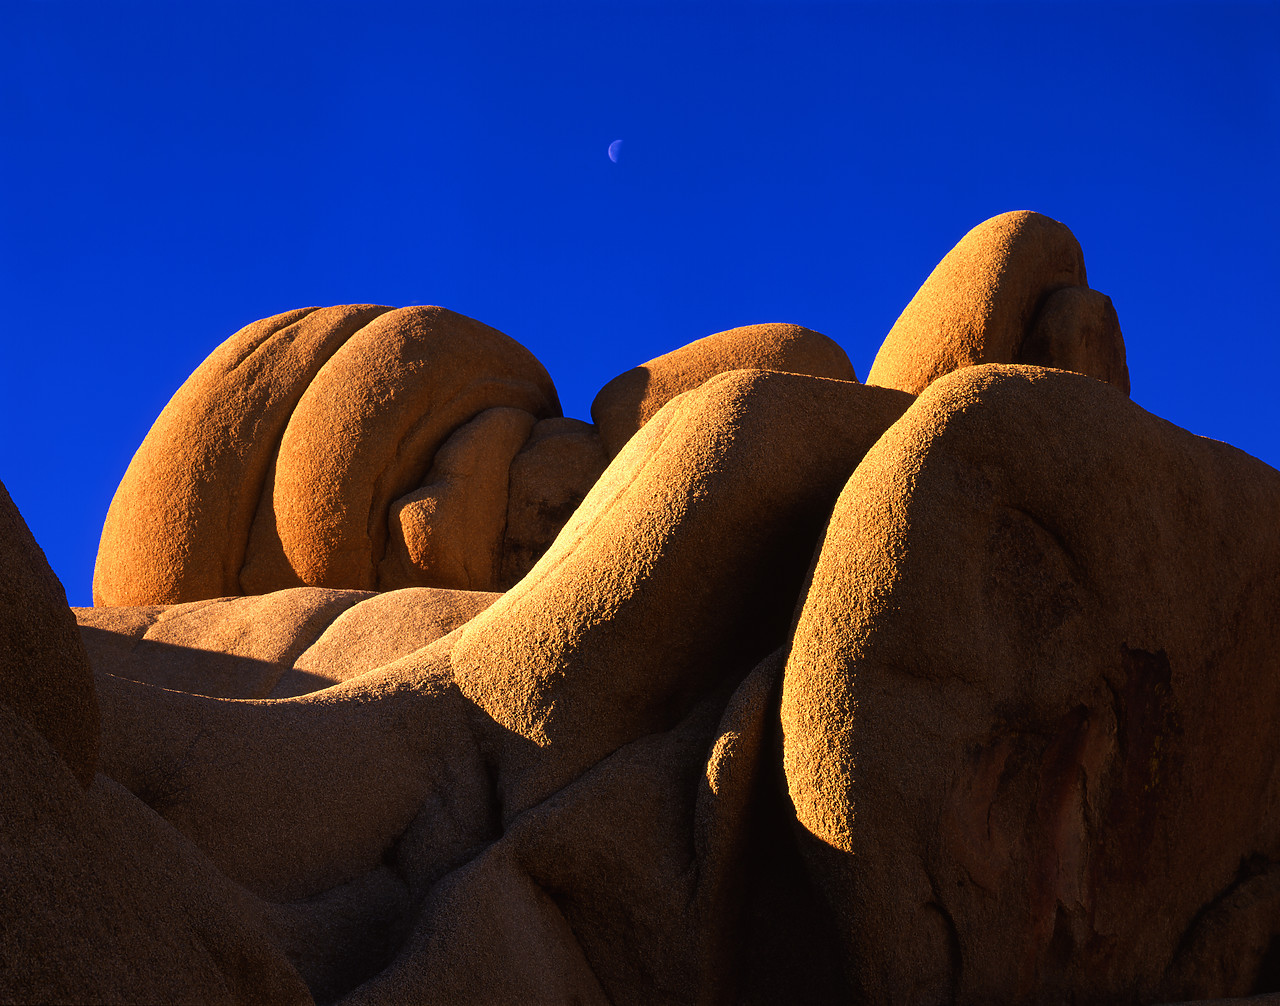 #040012-2 - Jumbo Rocks, Joshua Tree National Park, California, USA